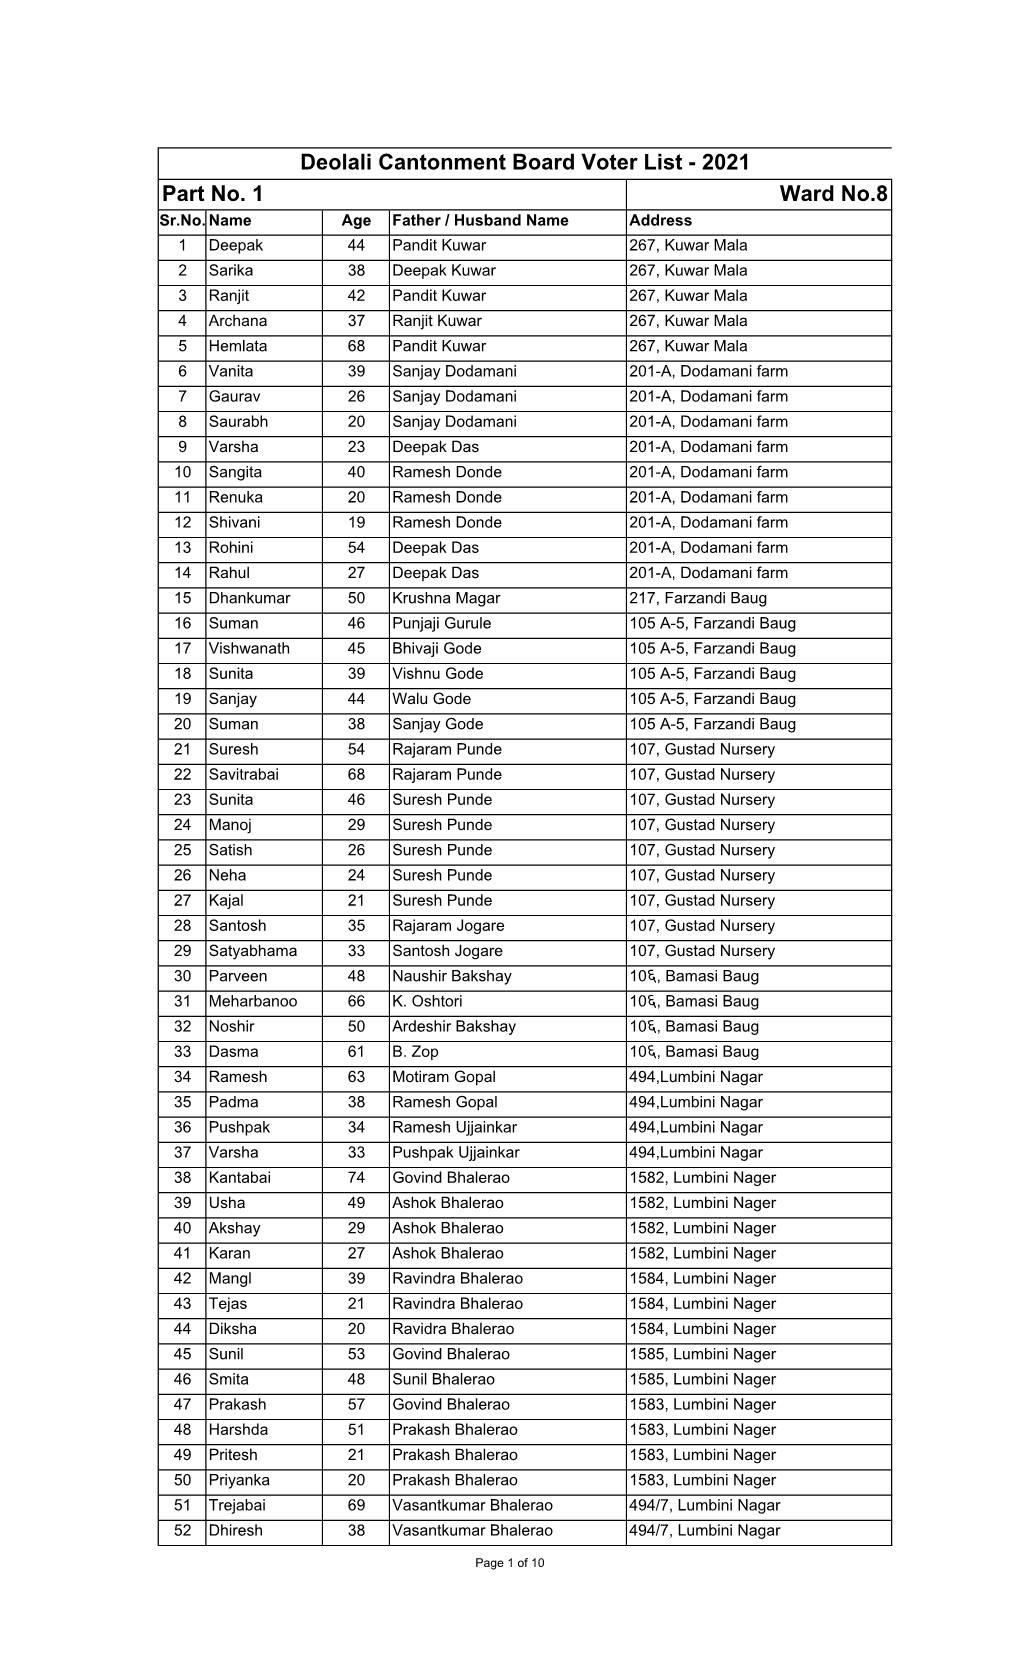 Ward No.8 Deolali Cantonment Board Voter List